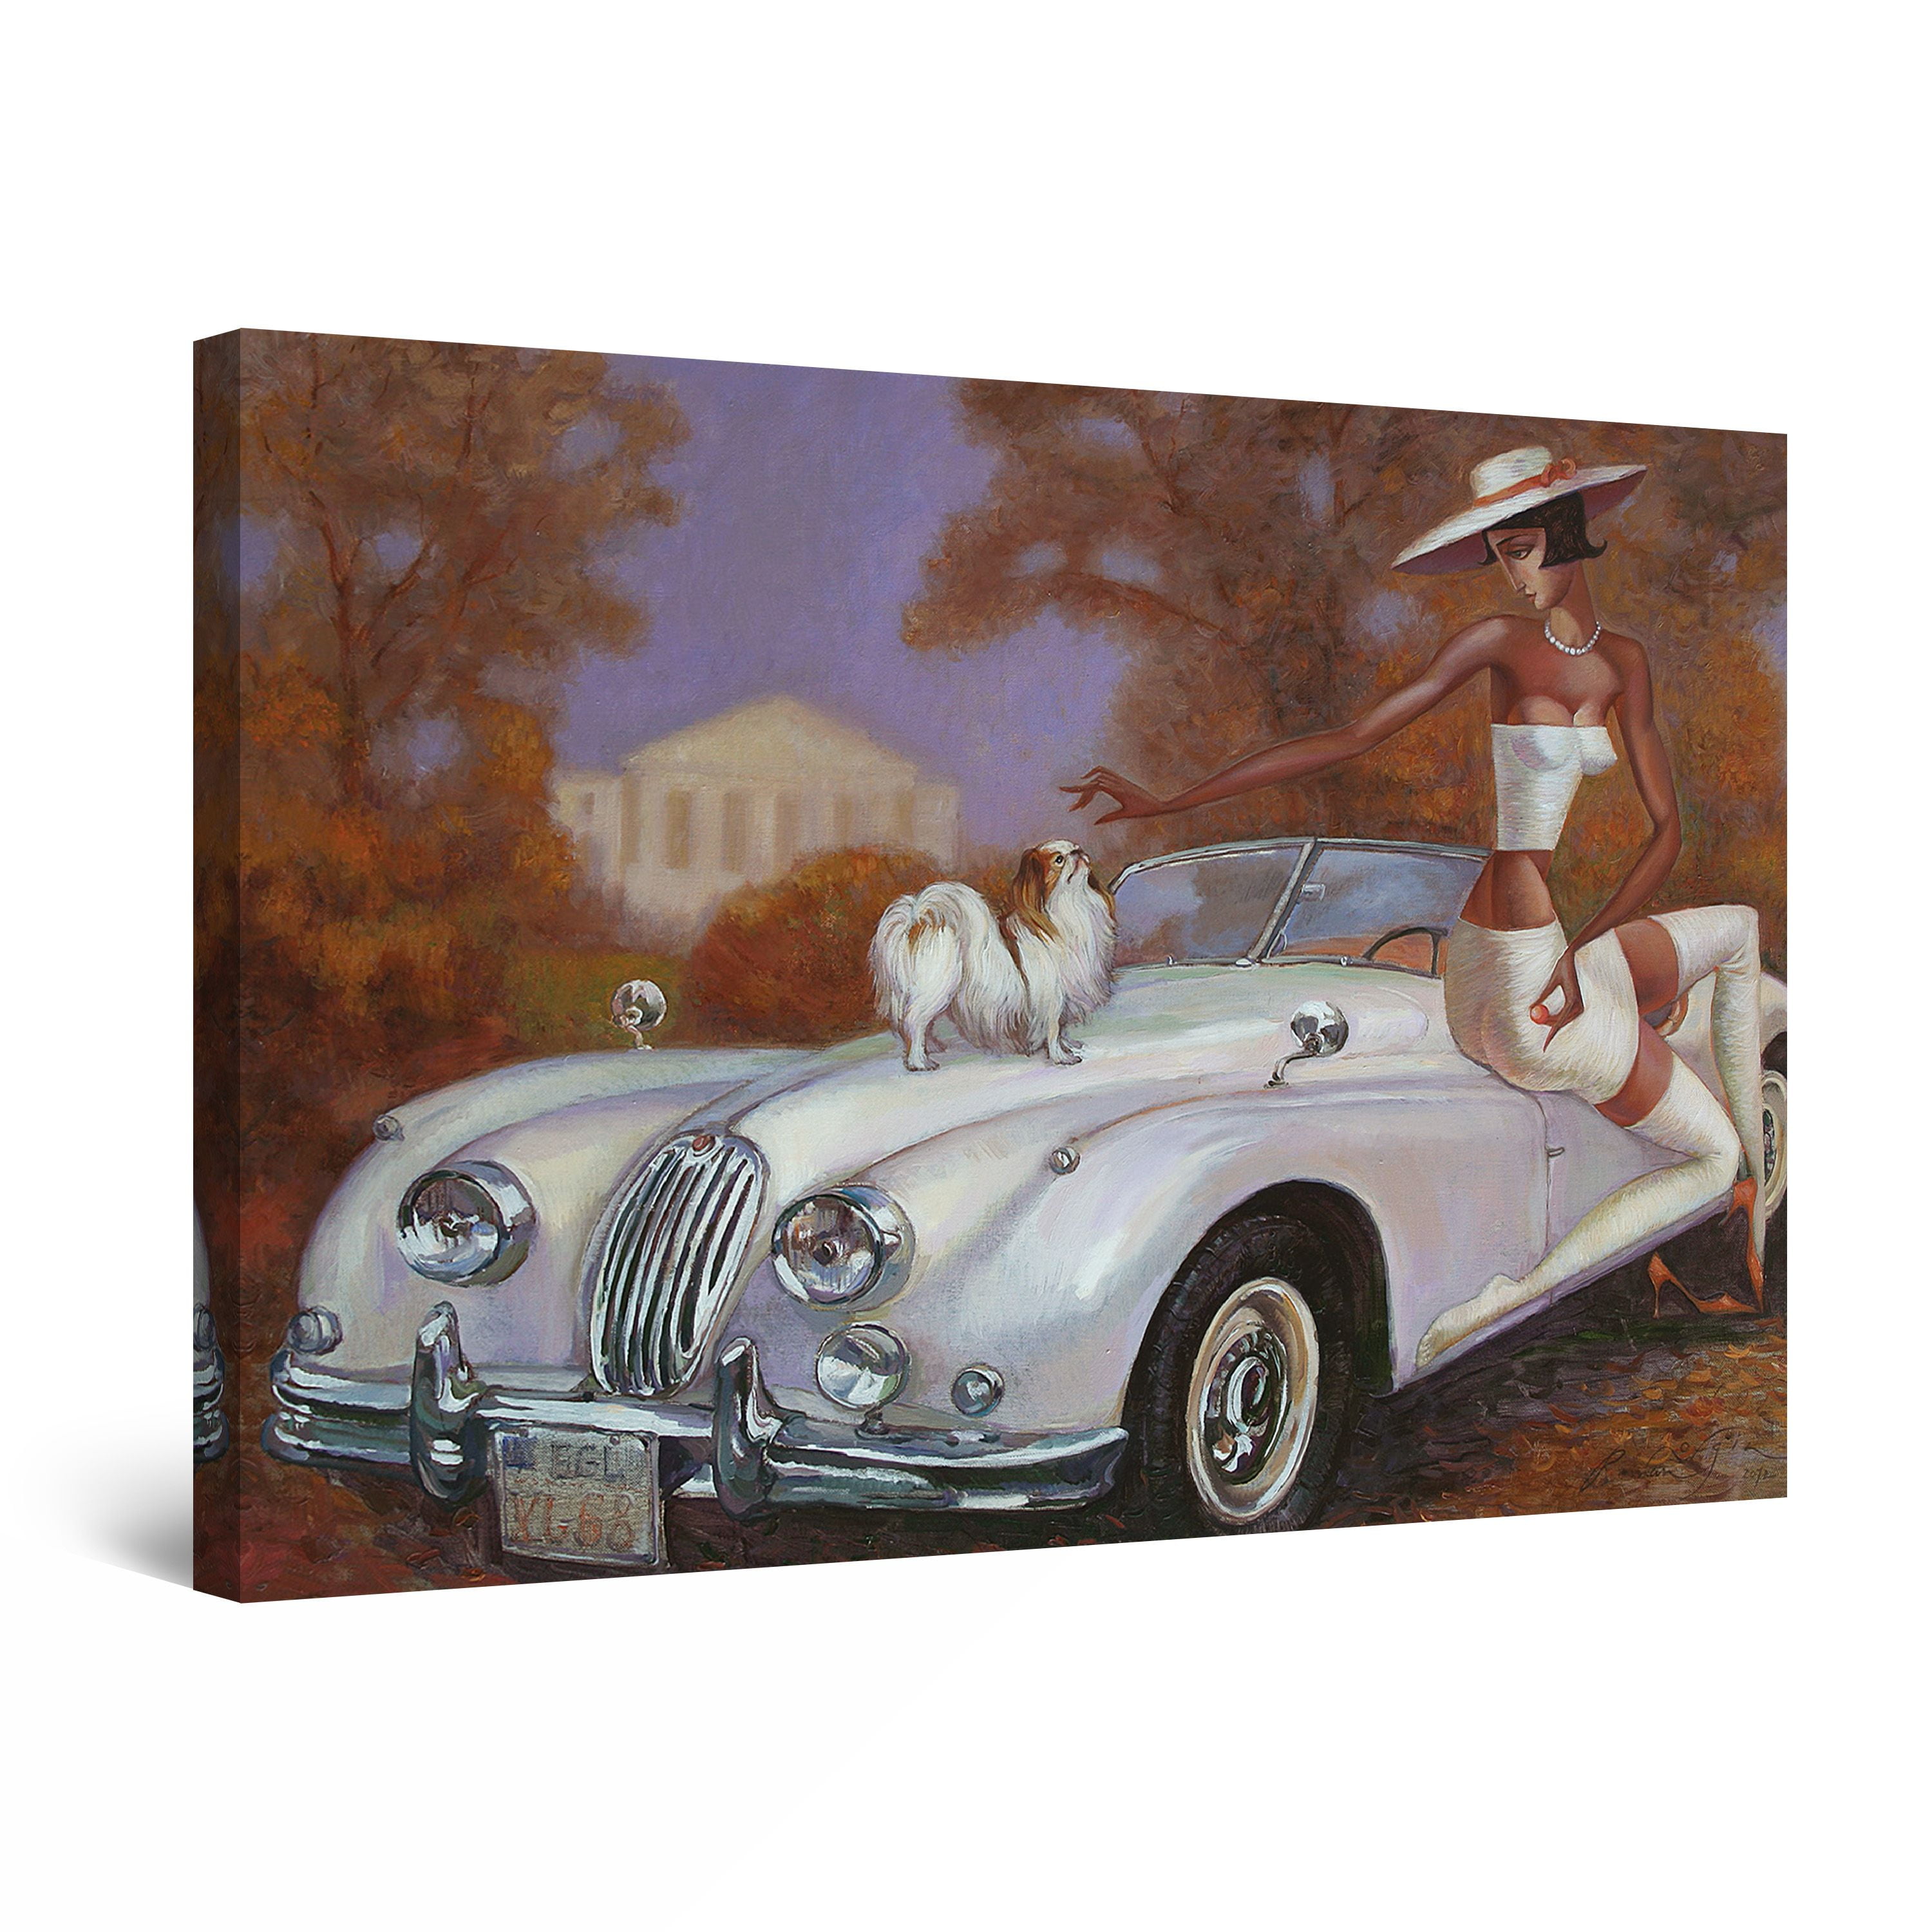 Details about   Love Jaguar Car  Photo Print On Framed Canvas WAll Art Home Office Decoration 